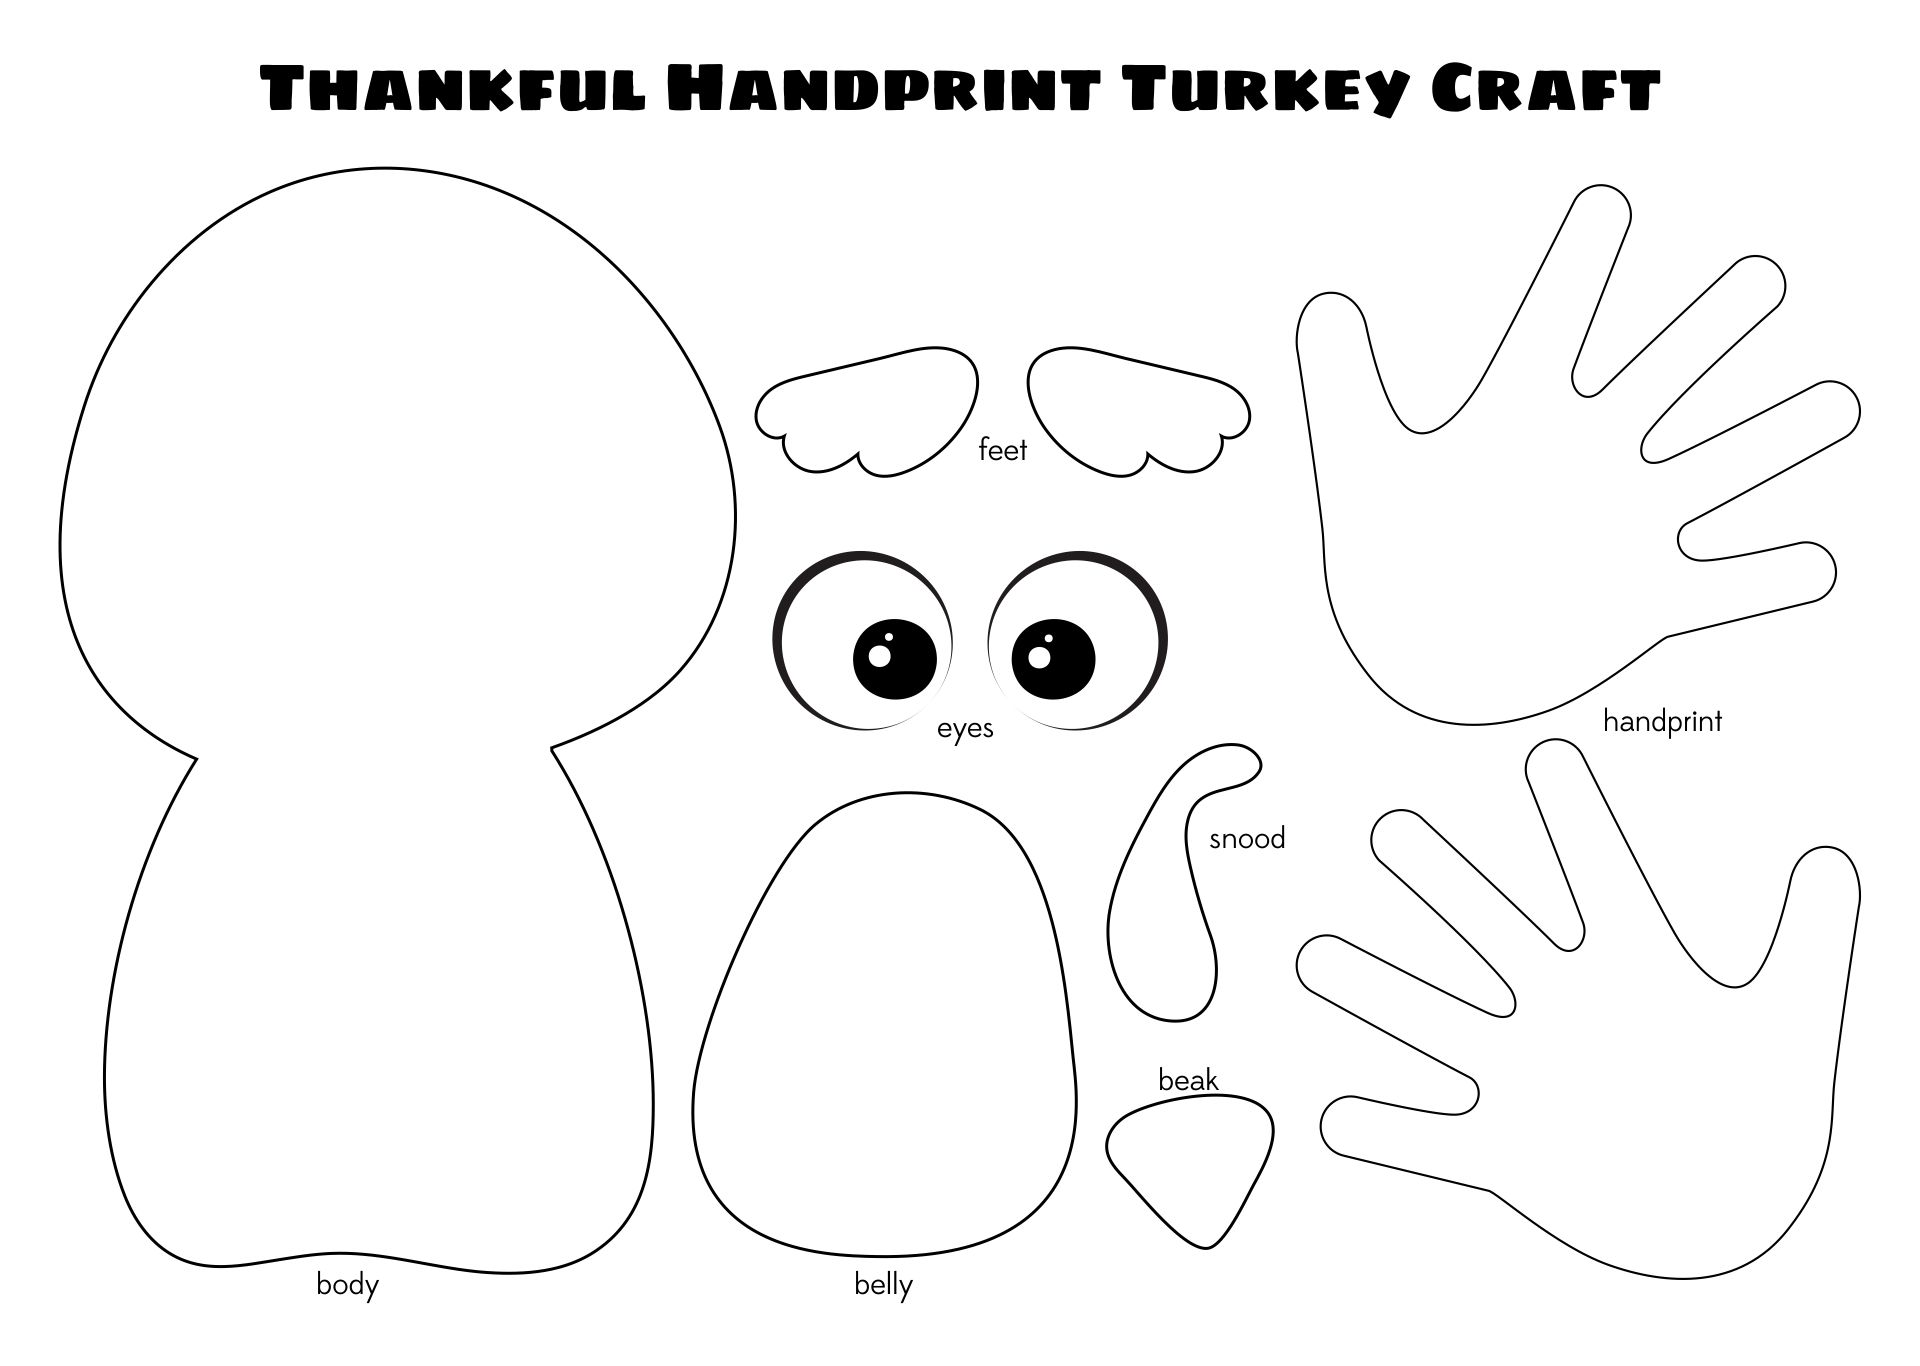 Thankful Handprint Turkey Craft Printable